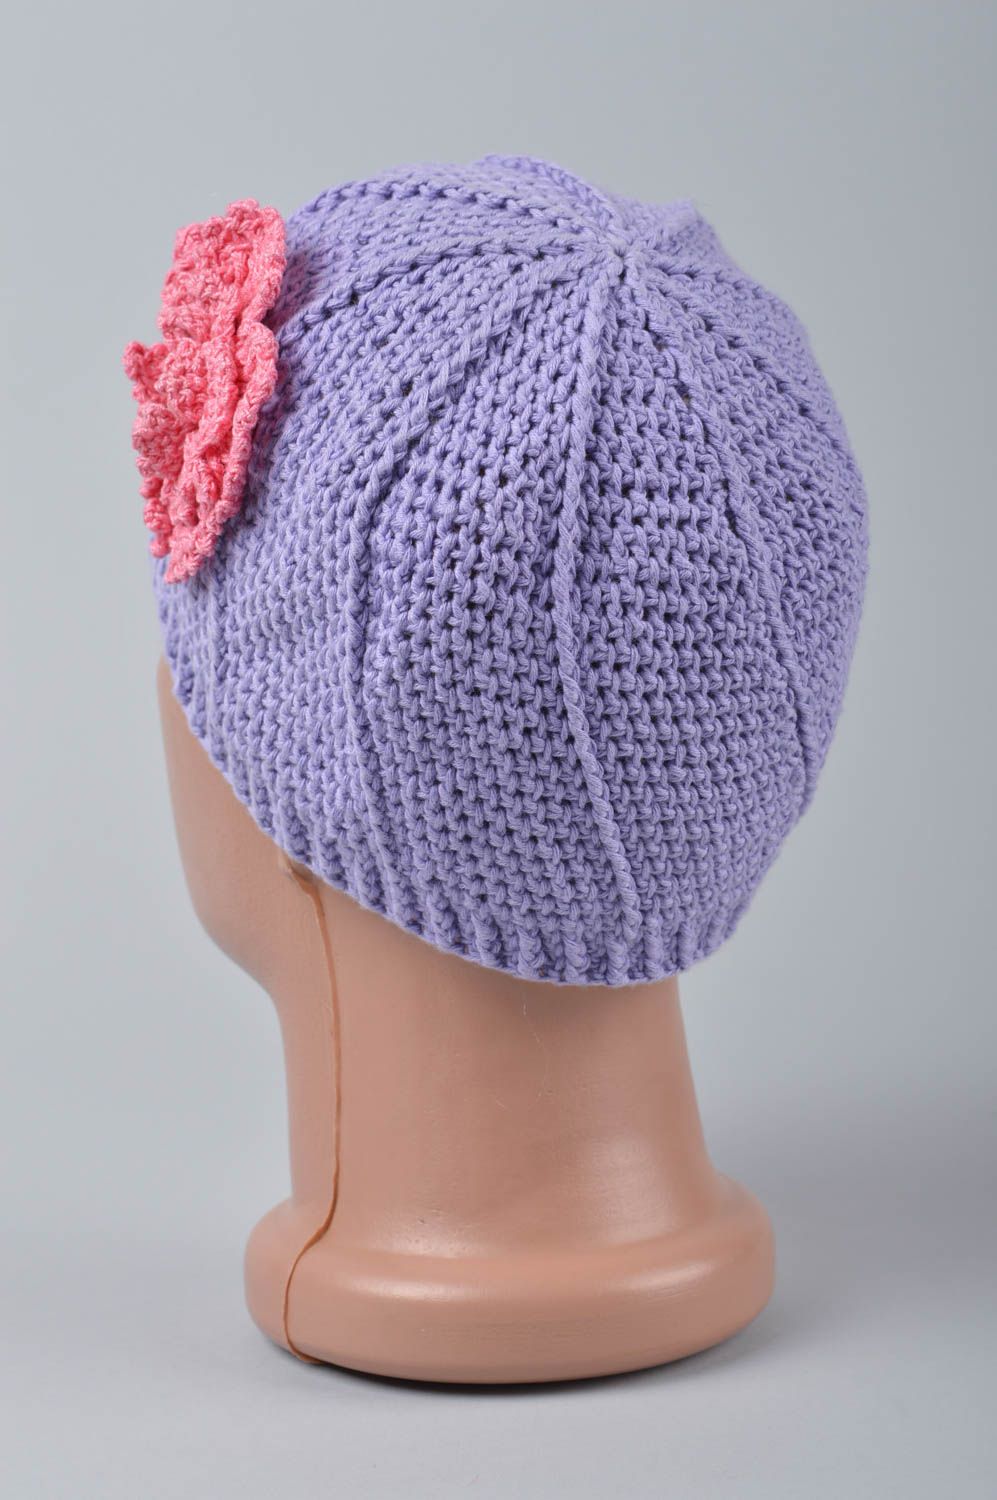 Crochet baby hat handmade toddler hat kids accessories gift ideas for kids photo 5